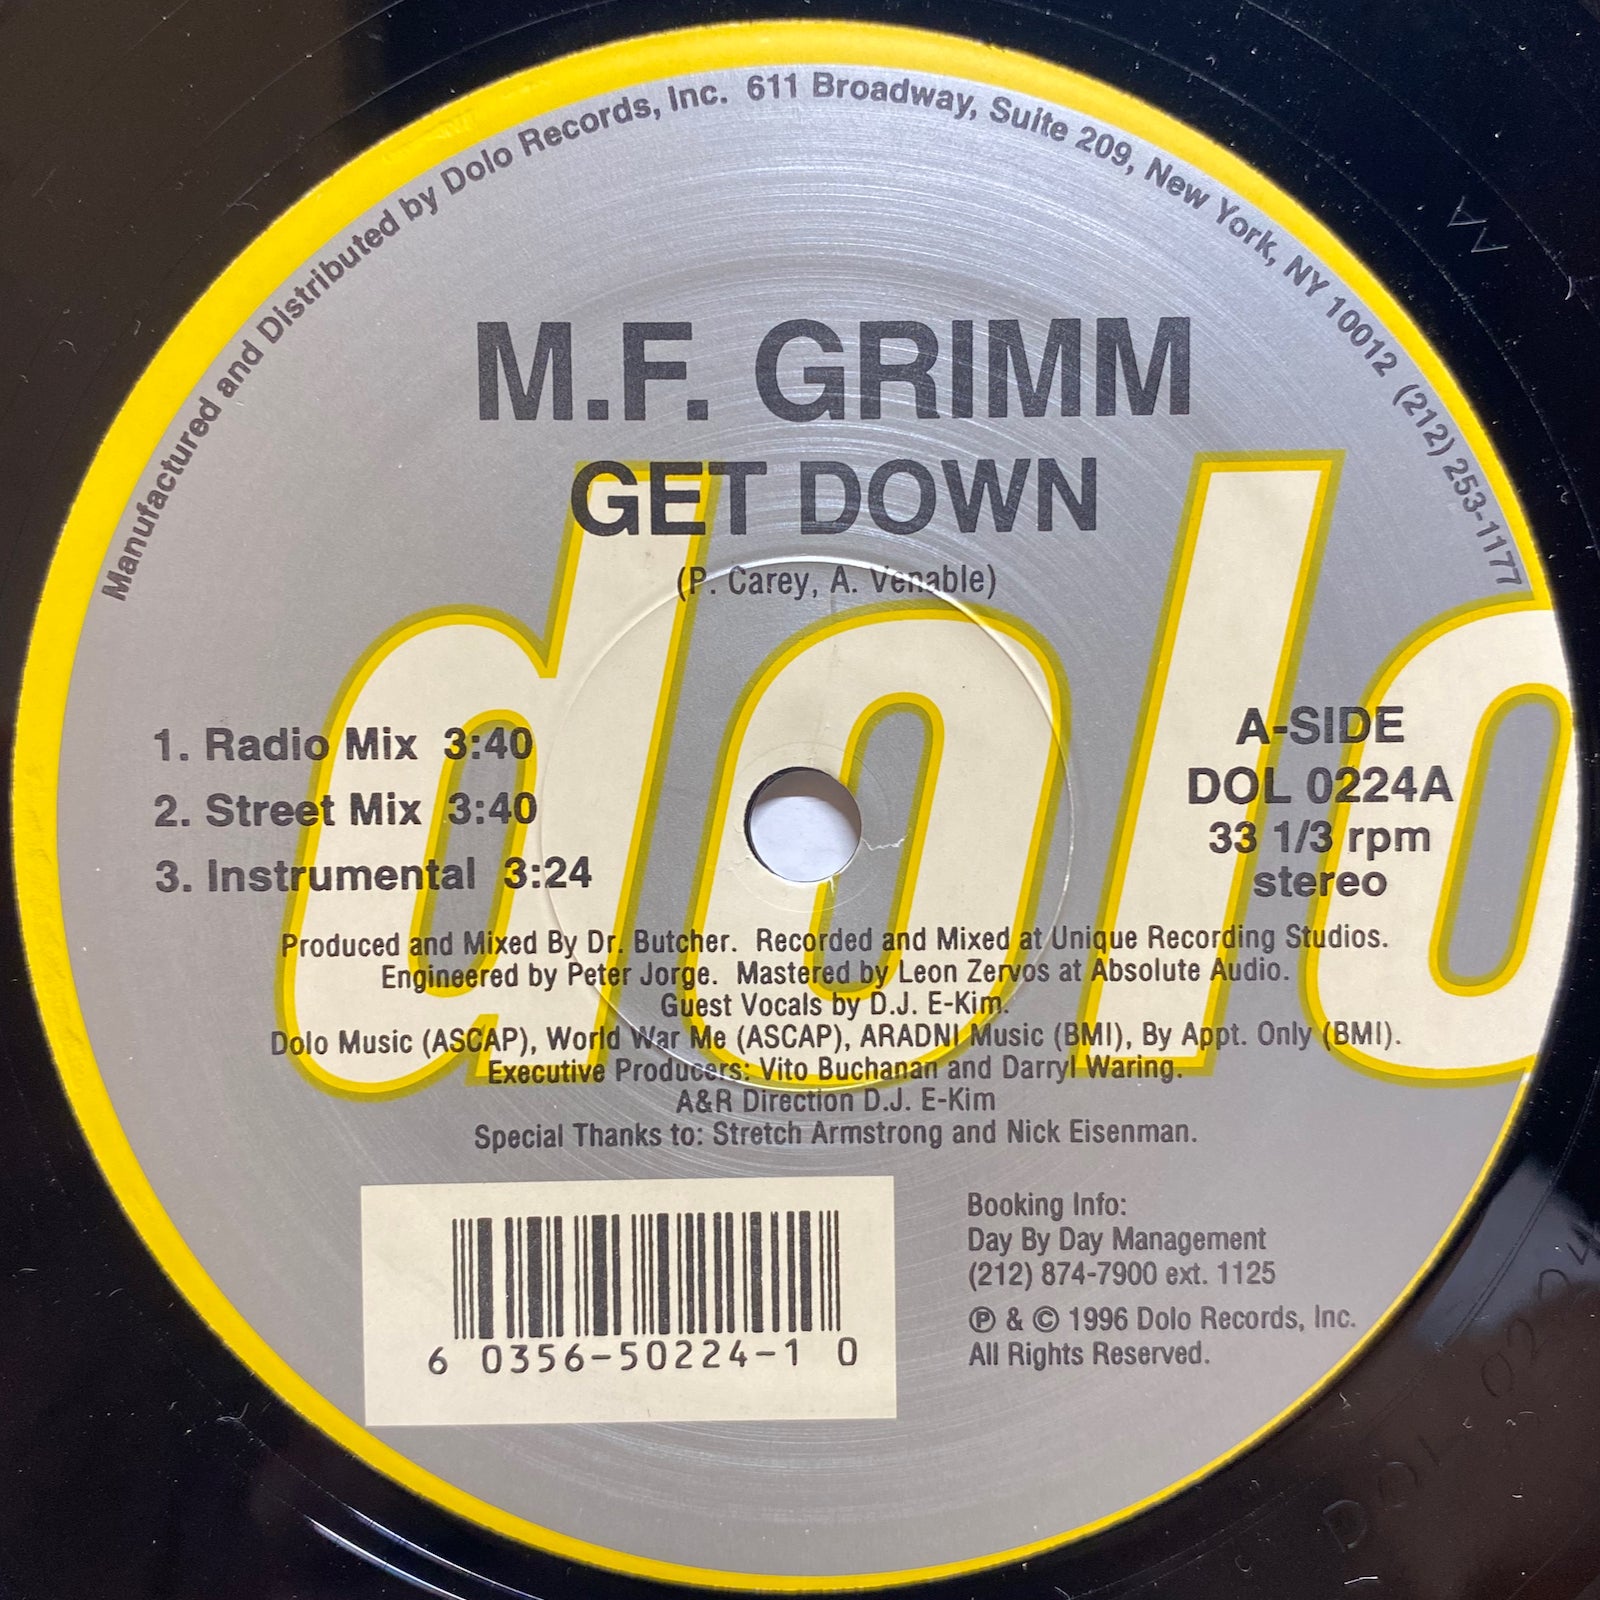 Down　Grimm　VINYL7　Get　RECORDS